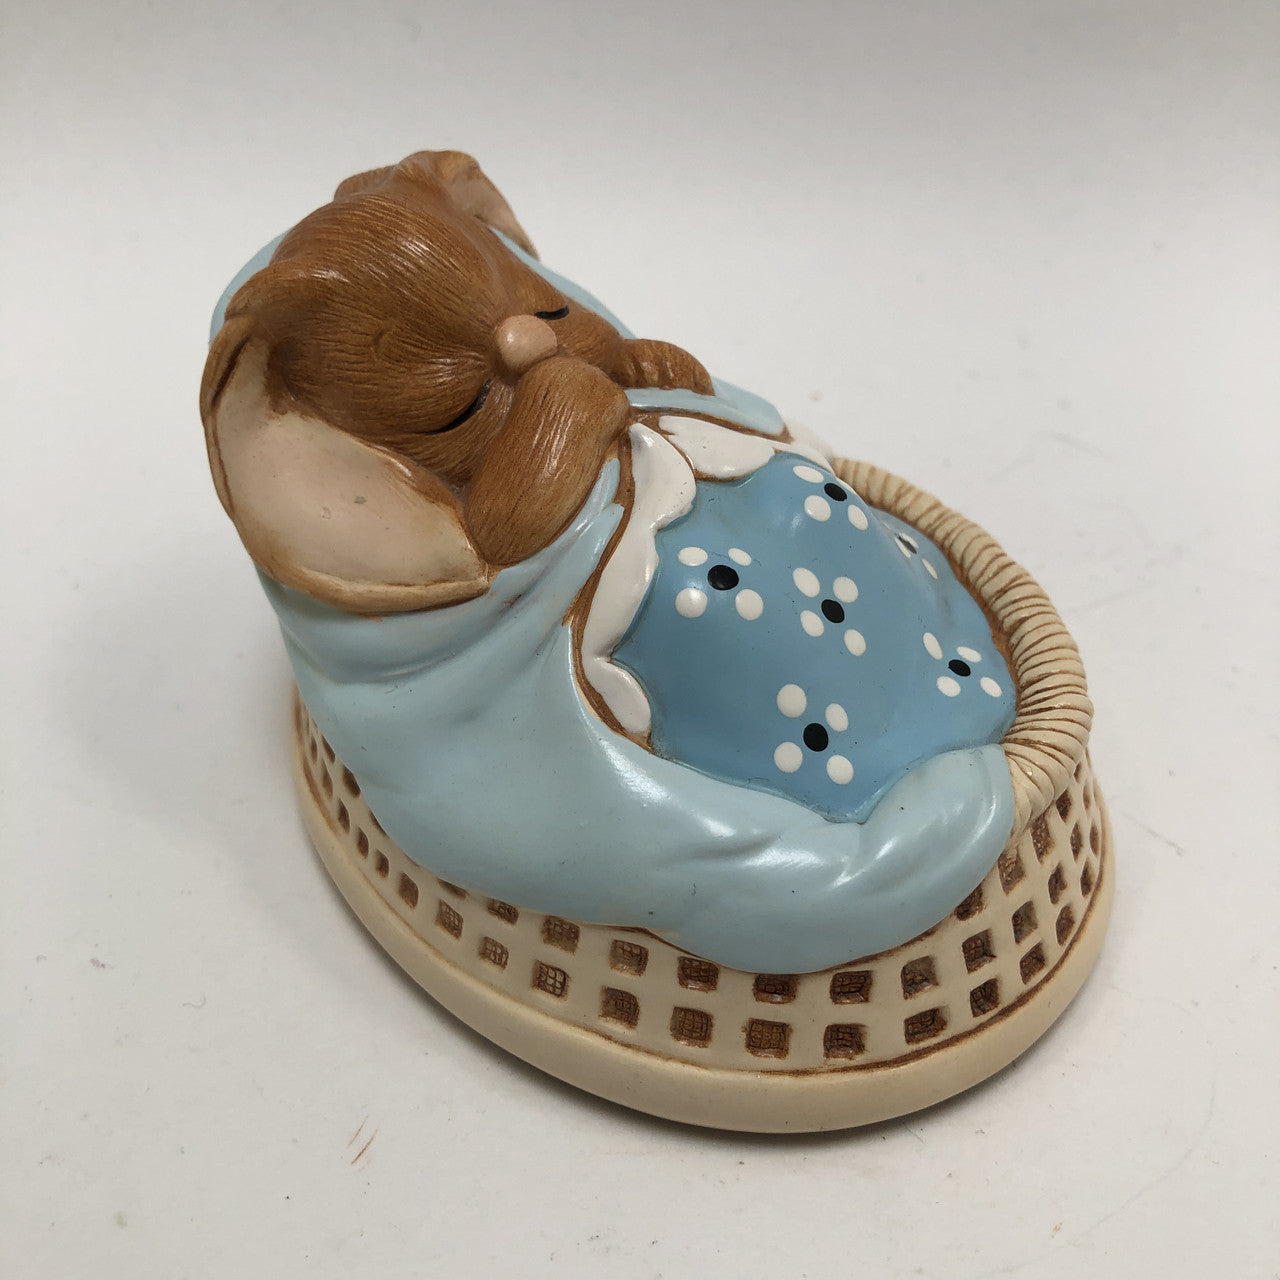 Pendelfin rabbit figurine - "Poppet" - sleeping bunny, blue three weave basket, vintage